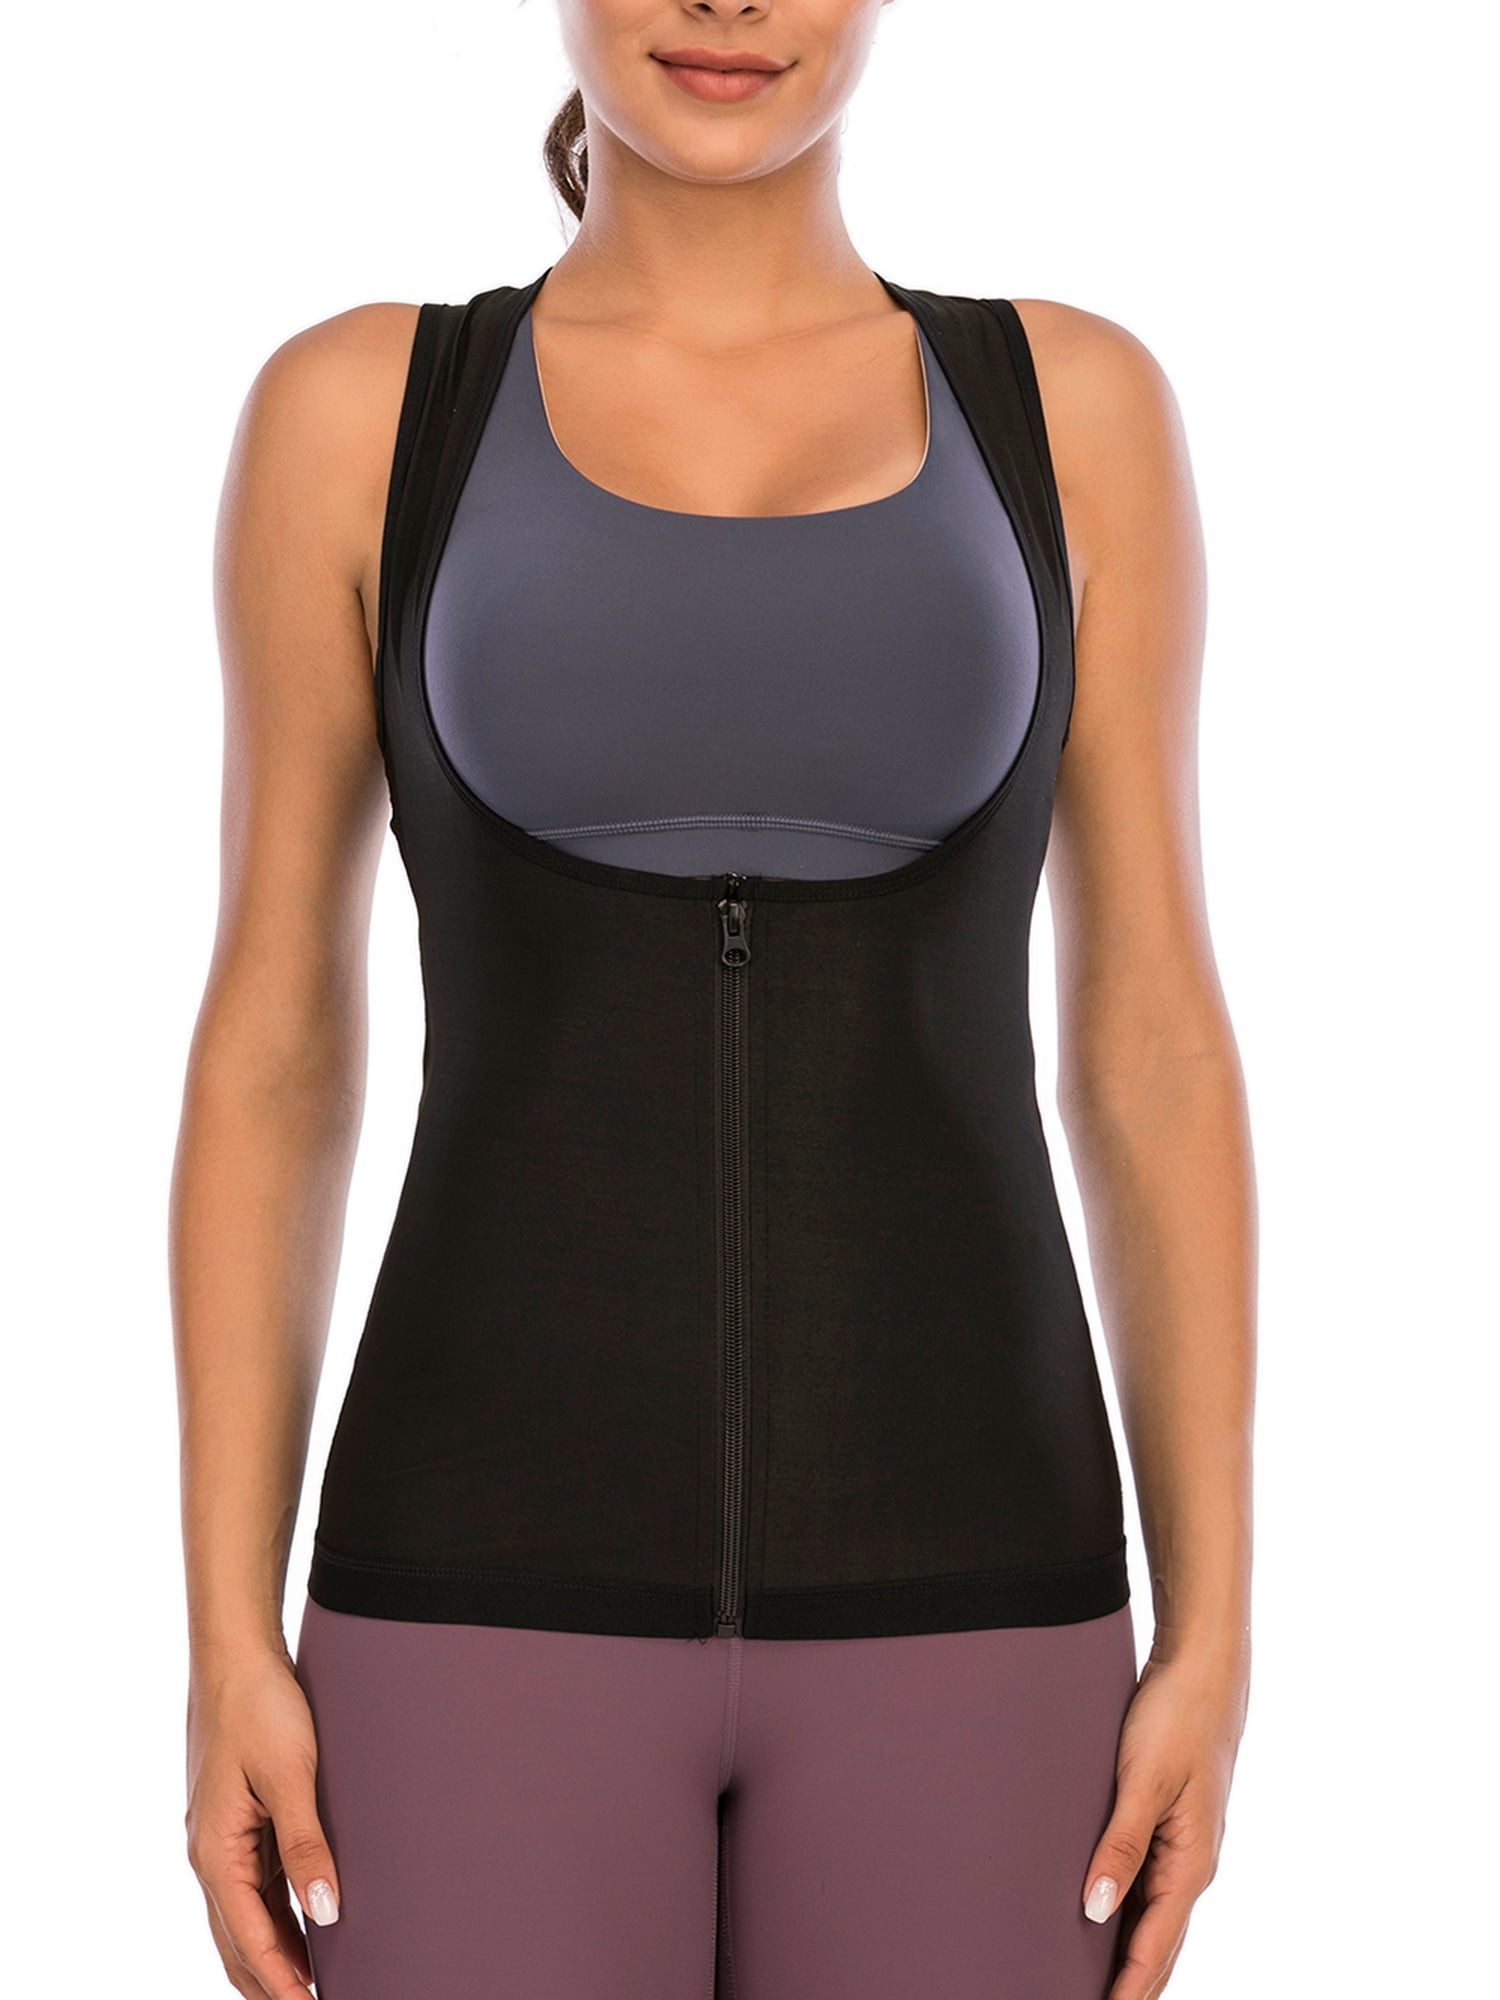 LELINTA Women Plus Size Sauna Sweat Vest Waist Trainer Vest Underbust  Corset Body Shaper Sauna Suit TaLELINTA Top with Zipper for Weight Loss  Workout 